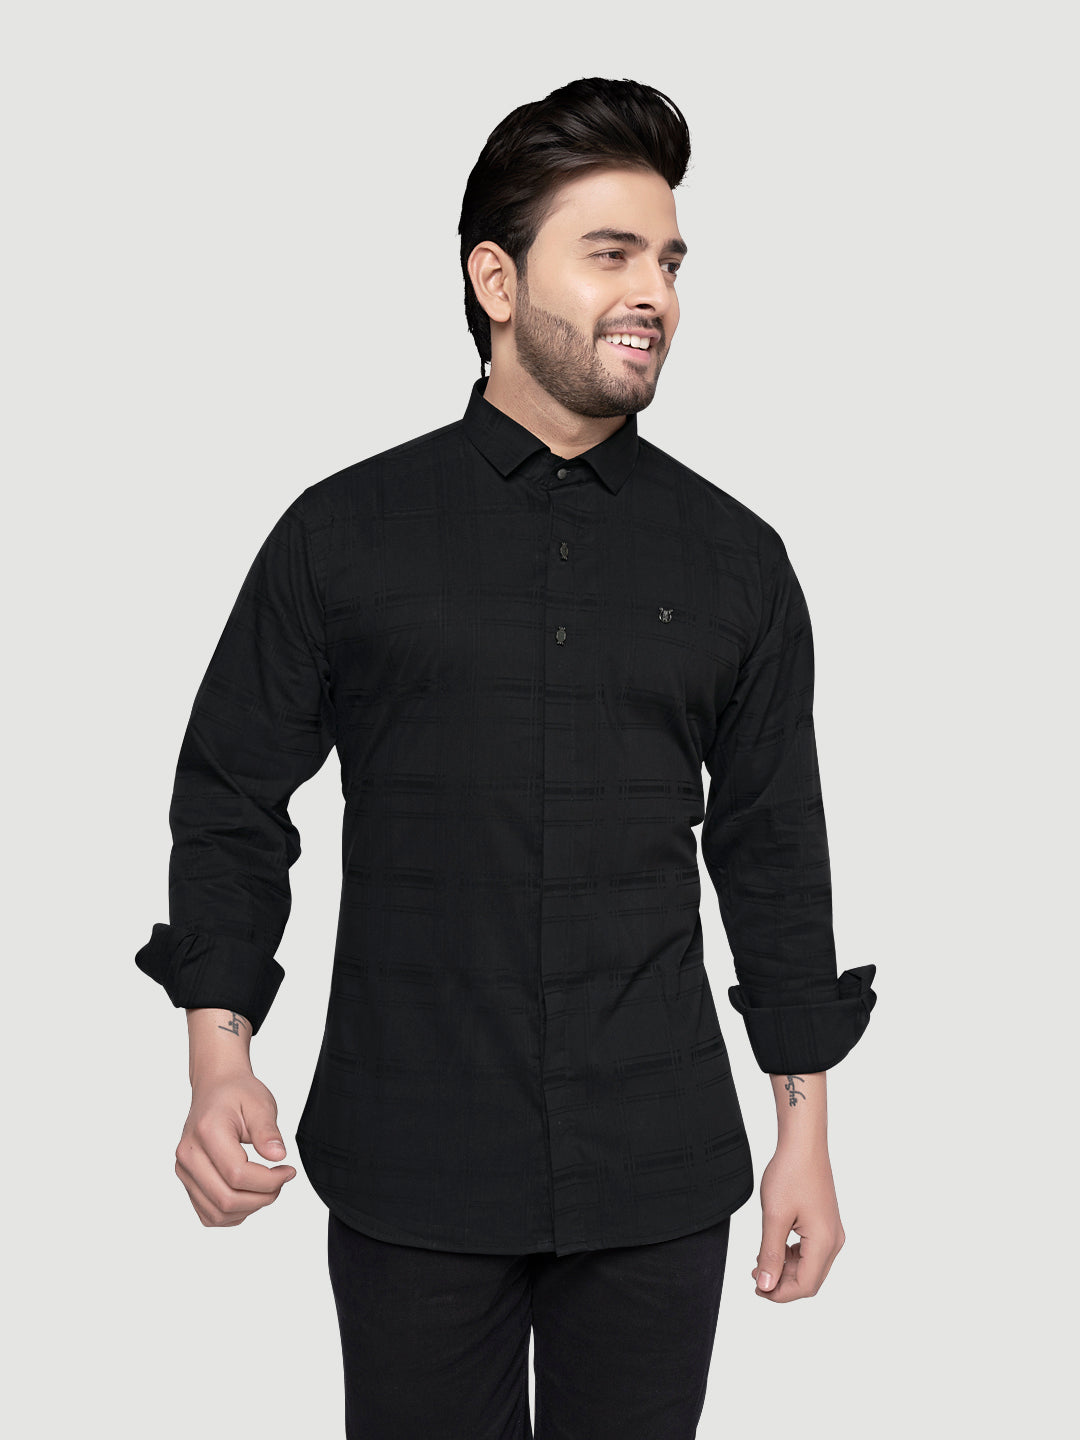 Designer Shirts with Collar Accessories- Black